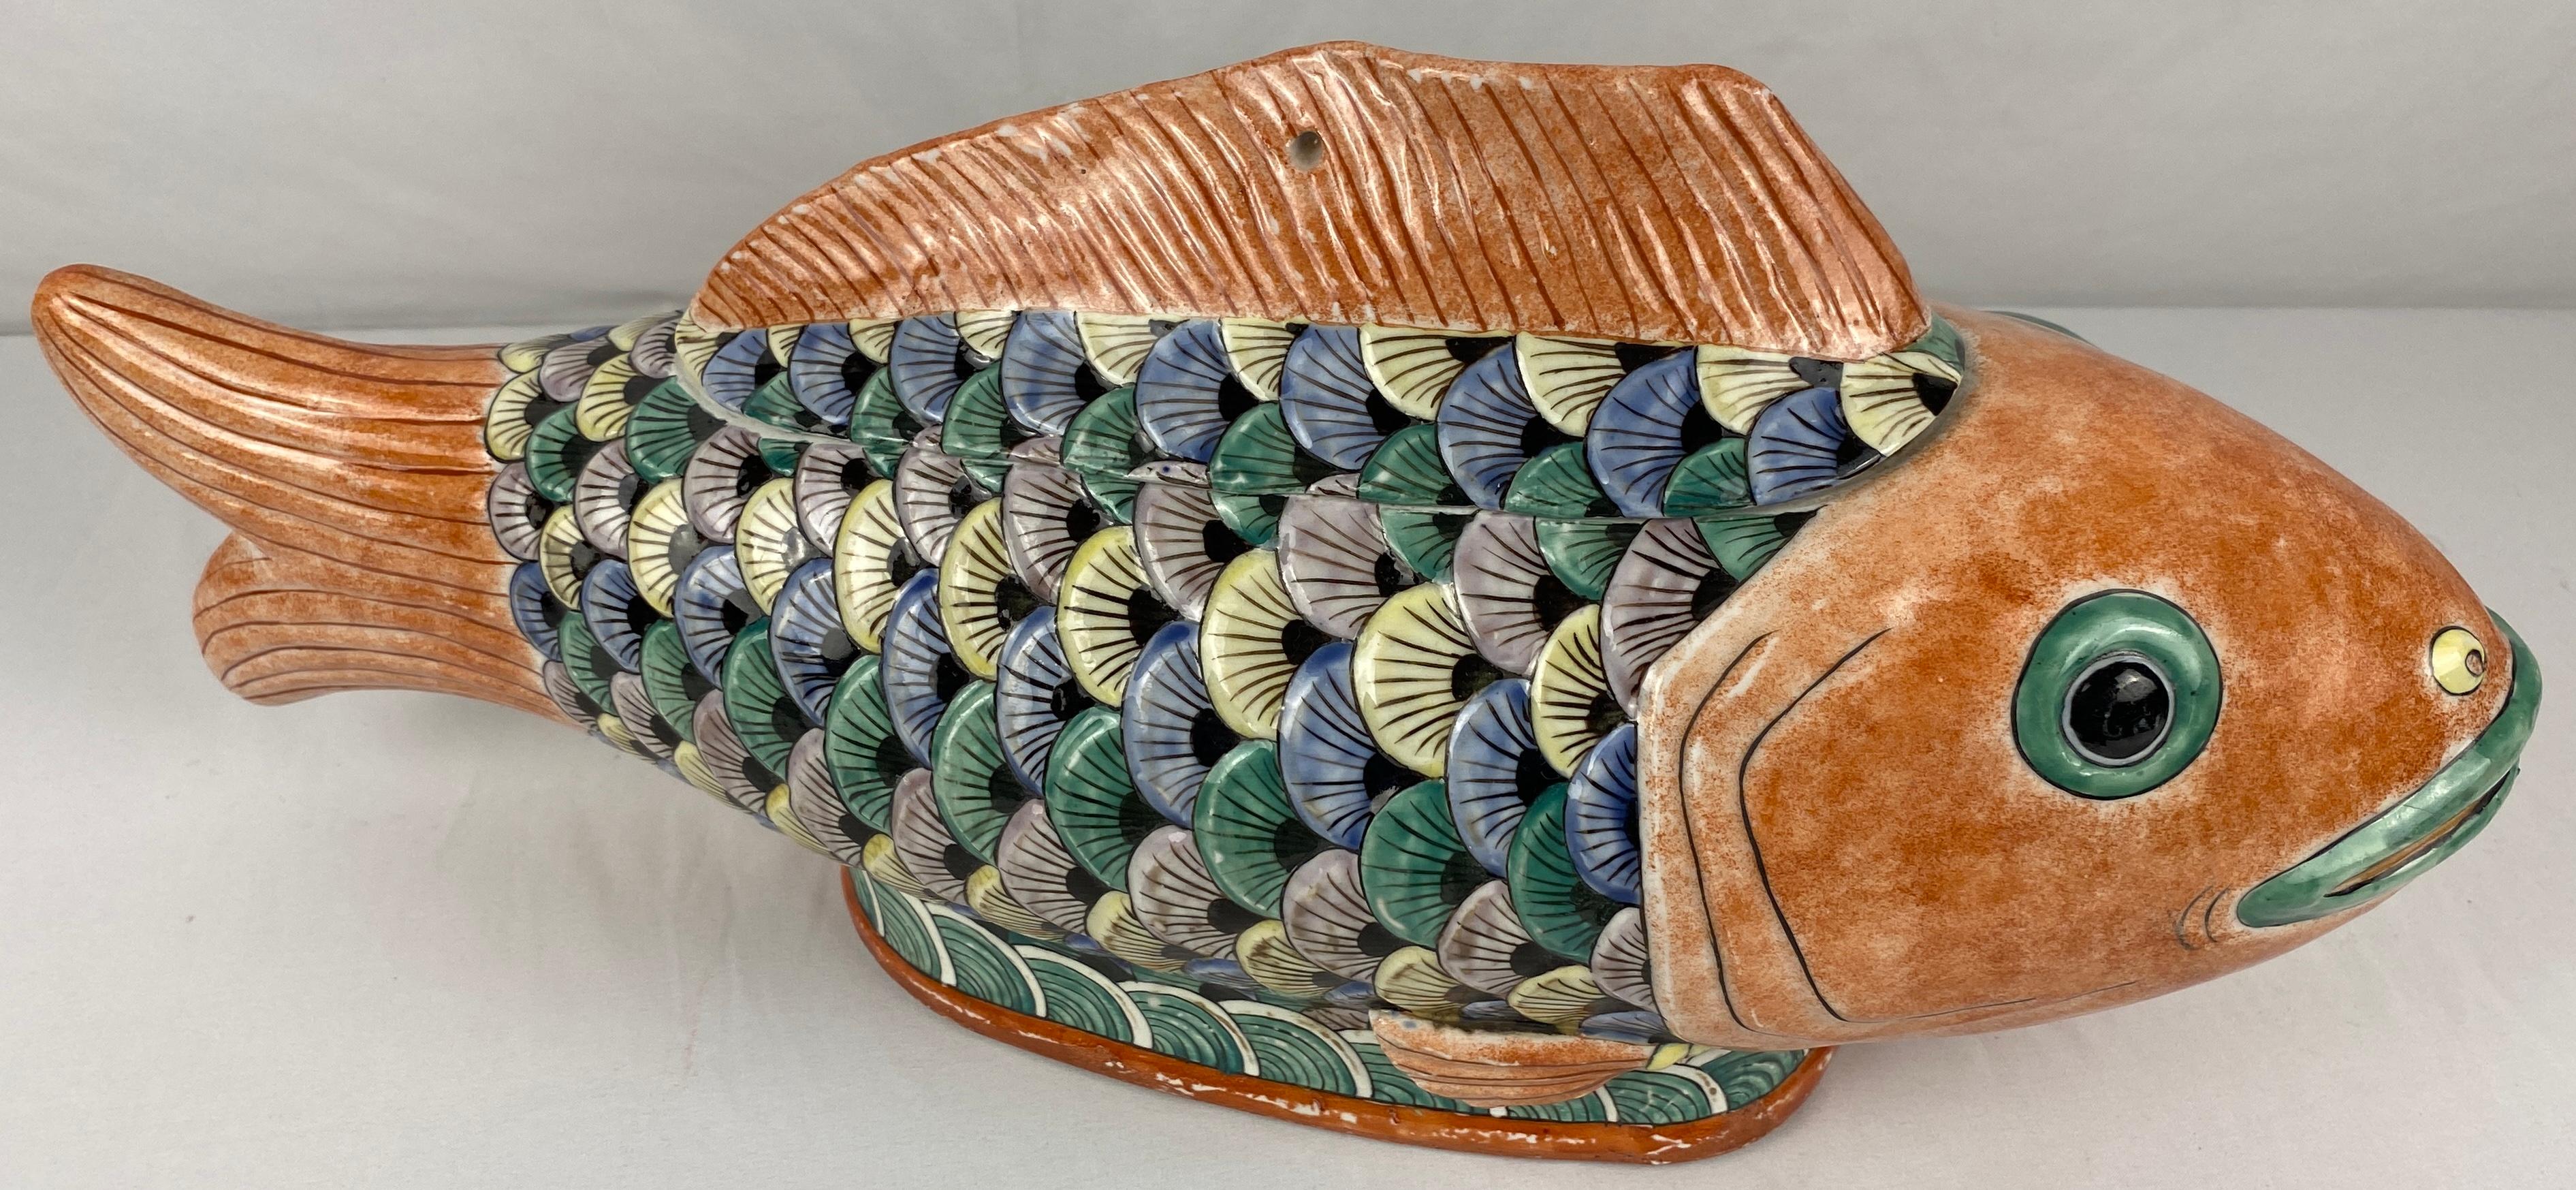 modele de poisson en poterie